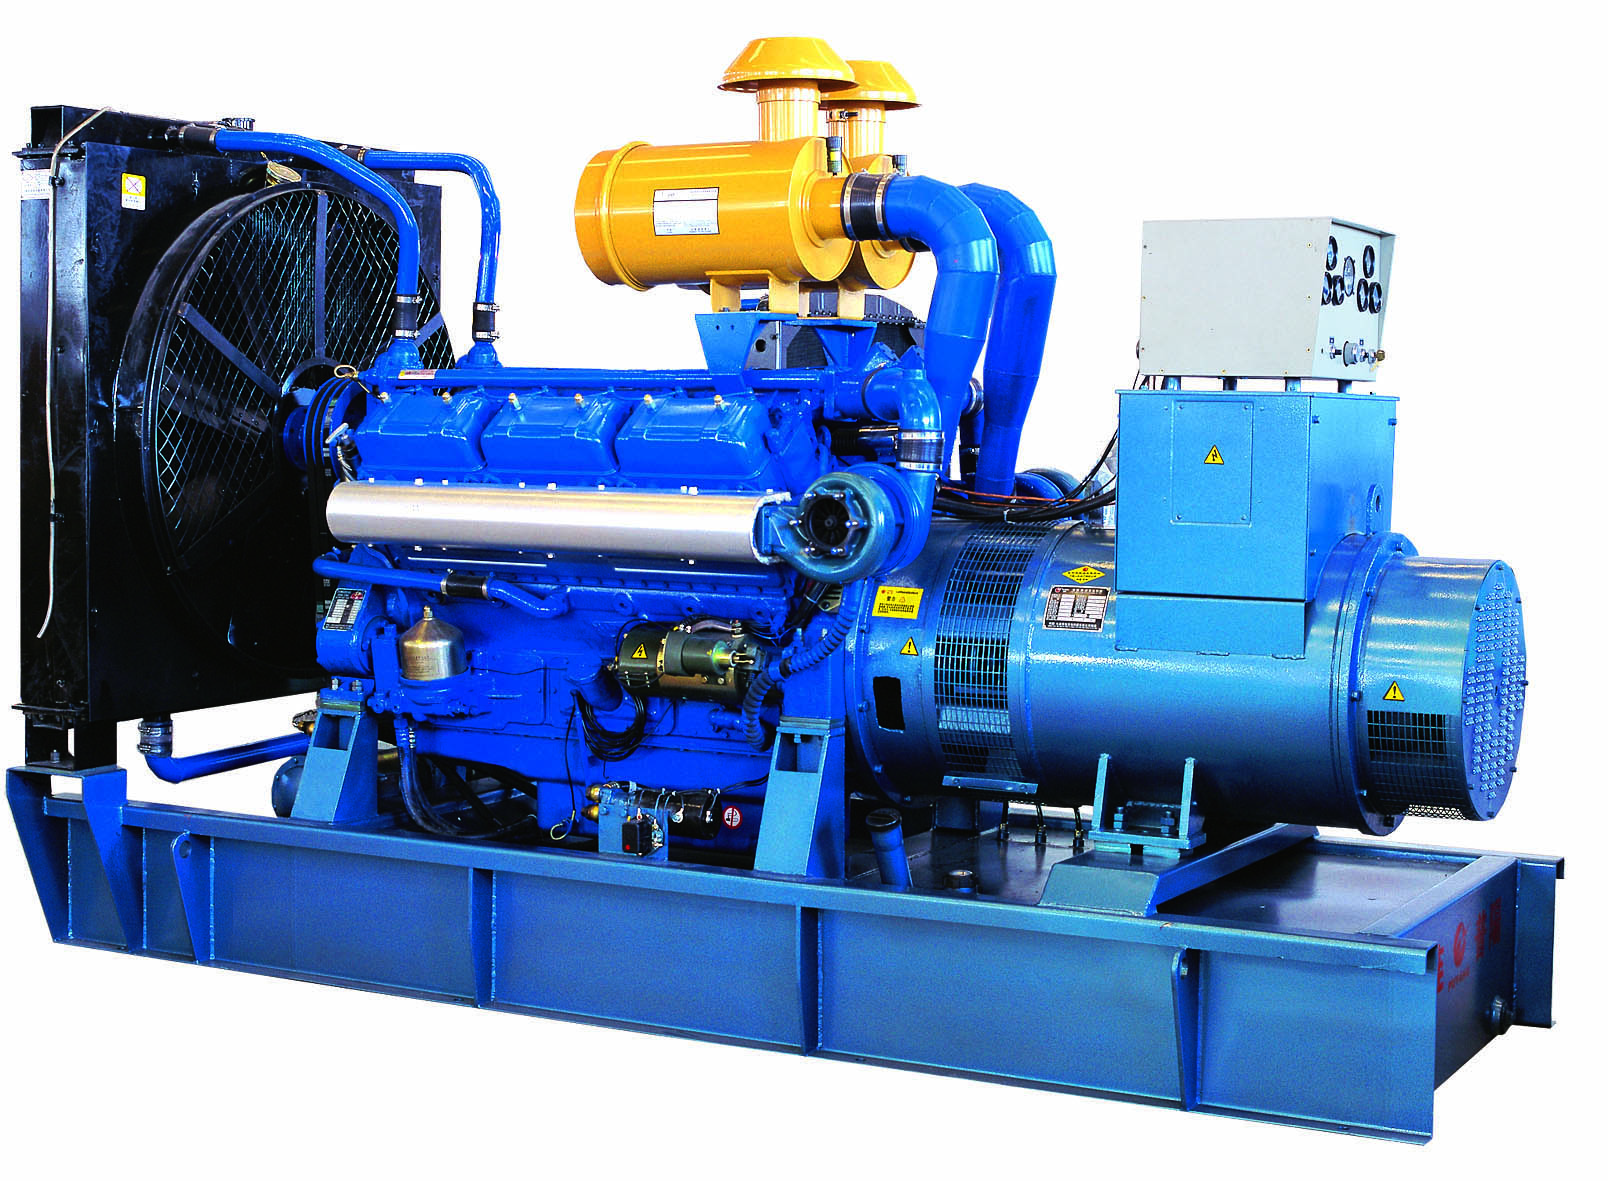 China made diesel generator